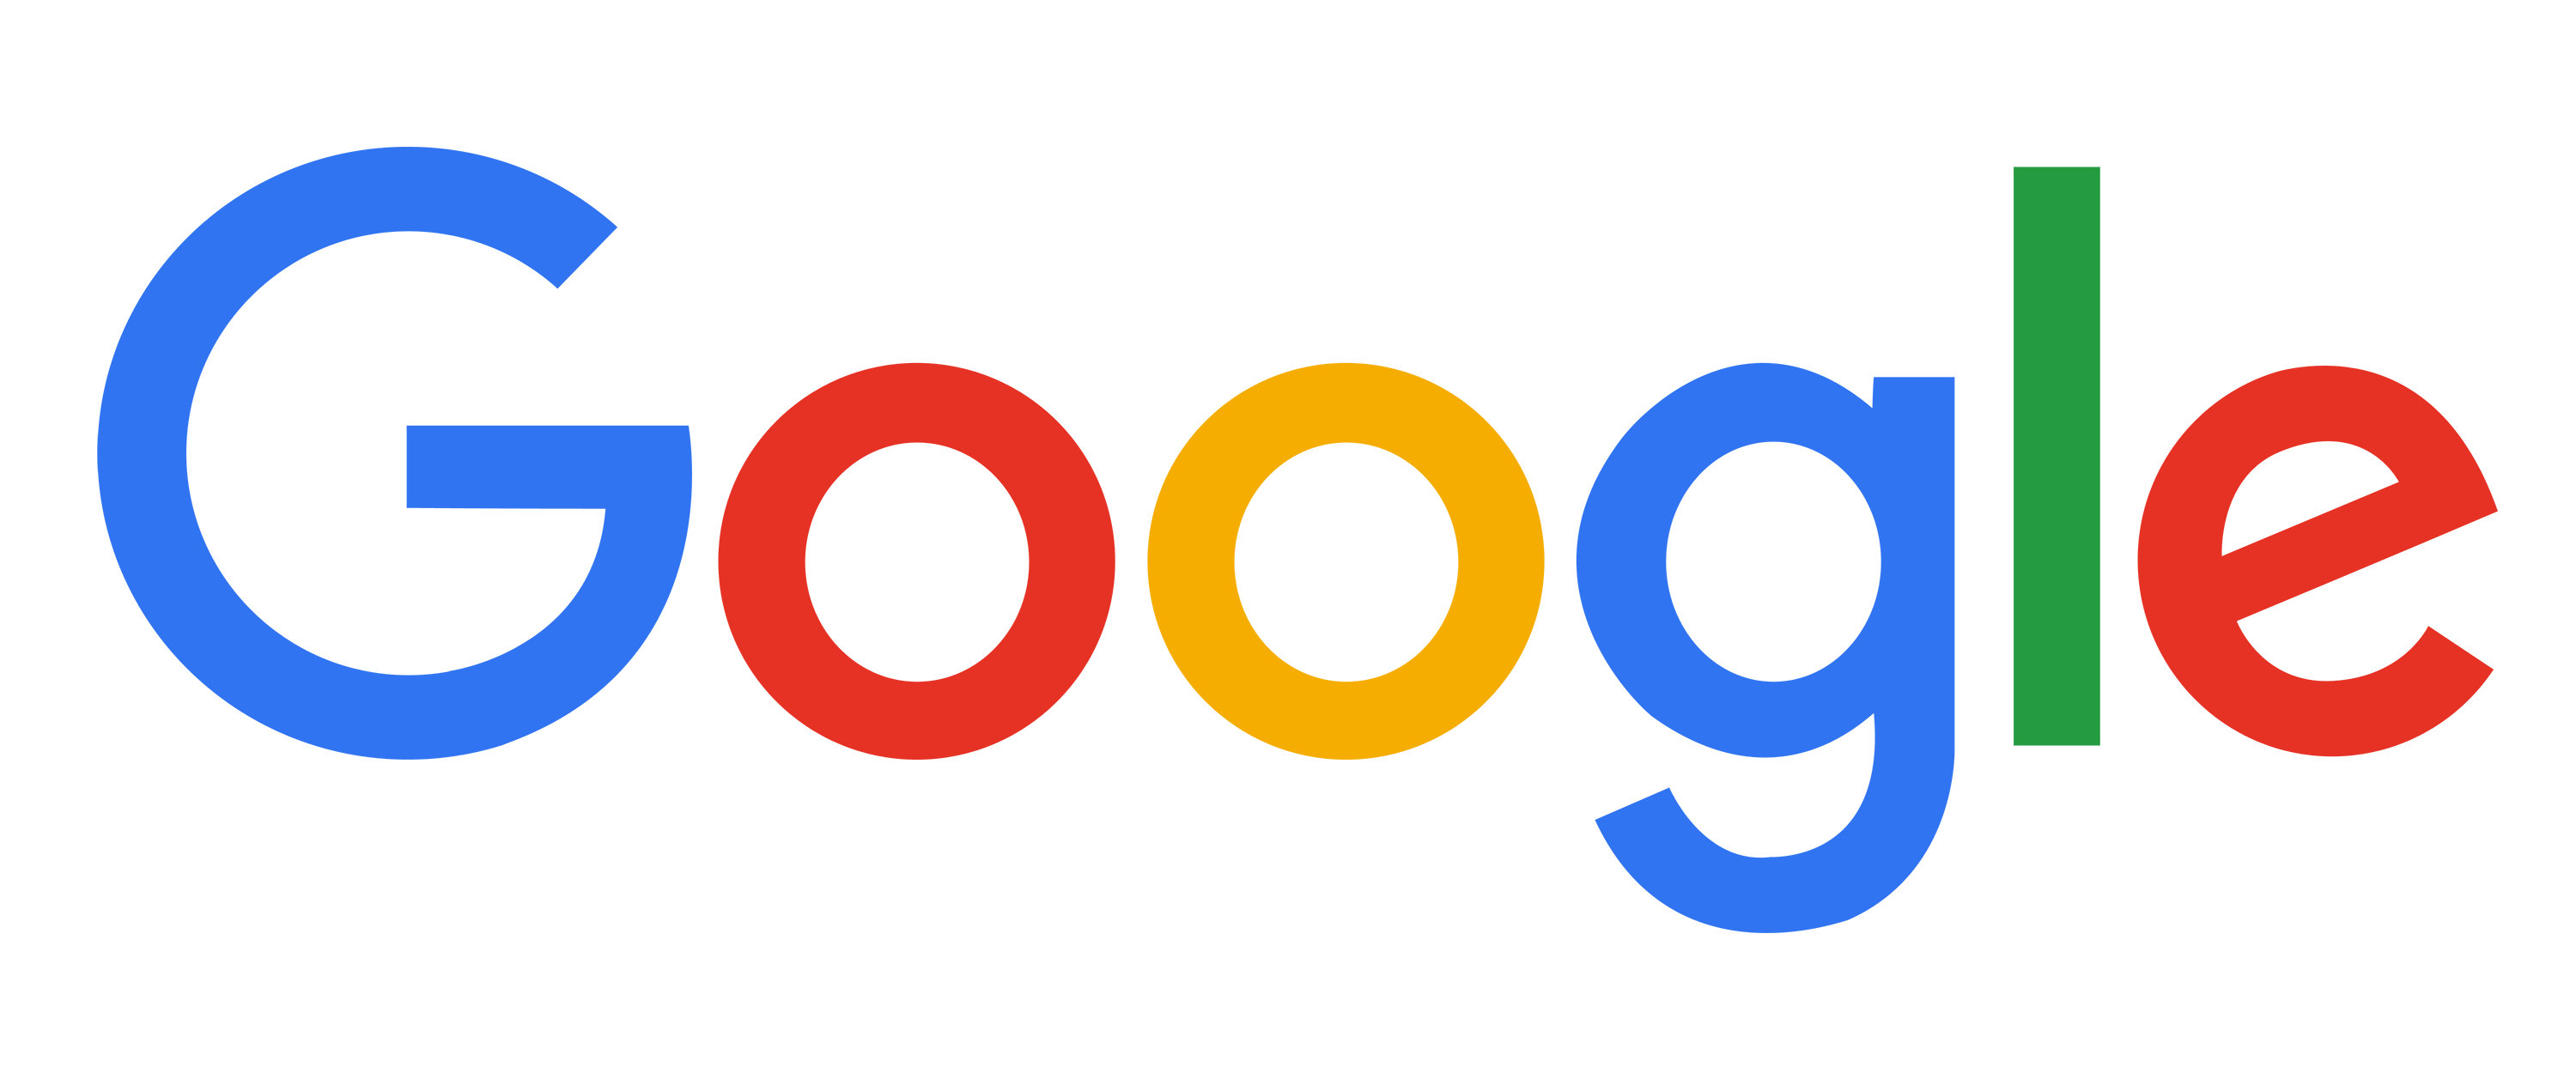 Google logo PNG - Google Logos Sample Images